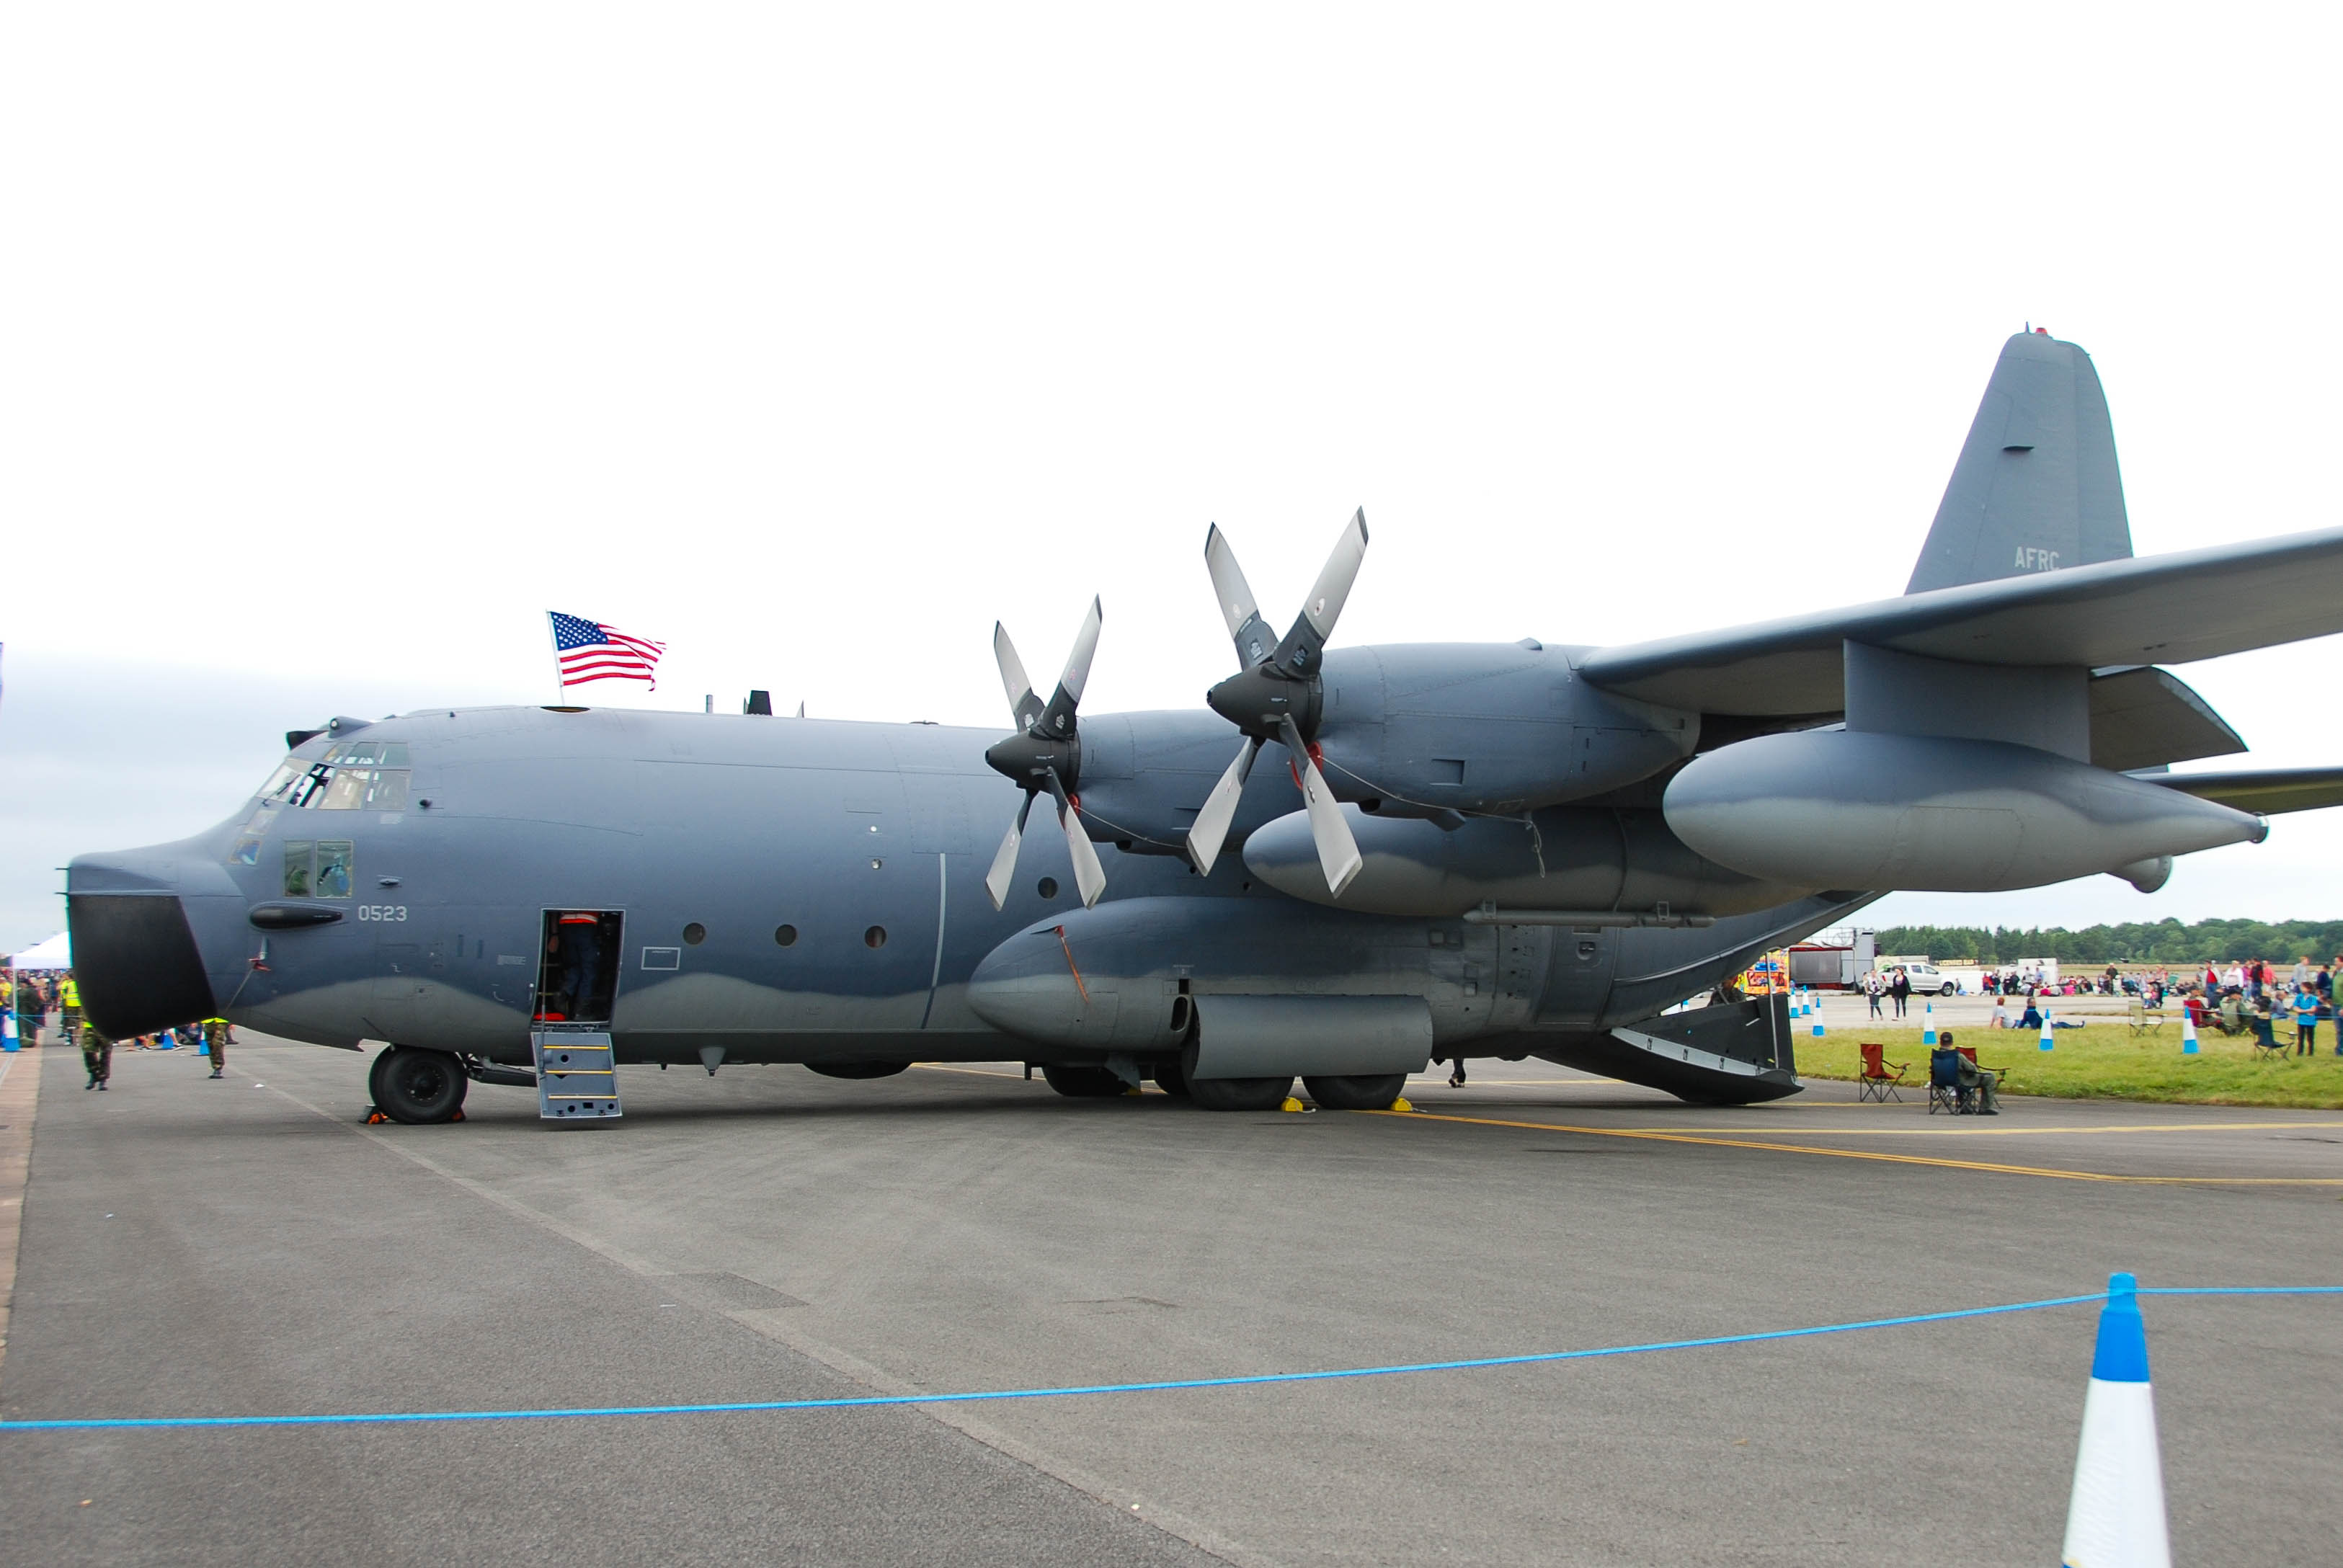 64-0523/640523 Preserved Lockheed C-130 Hercules Airframe Information - AVSpotters.com